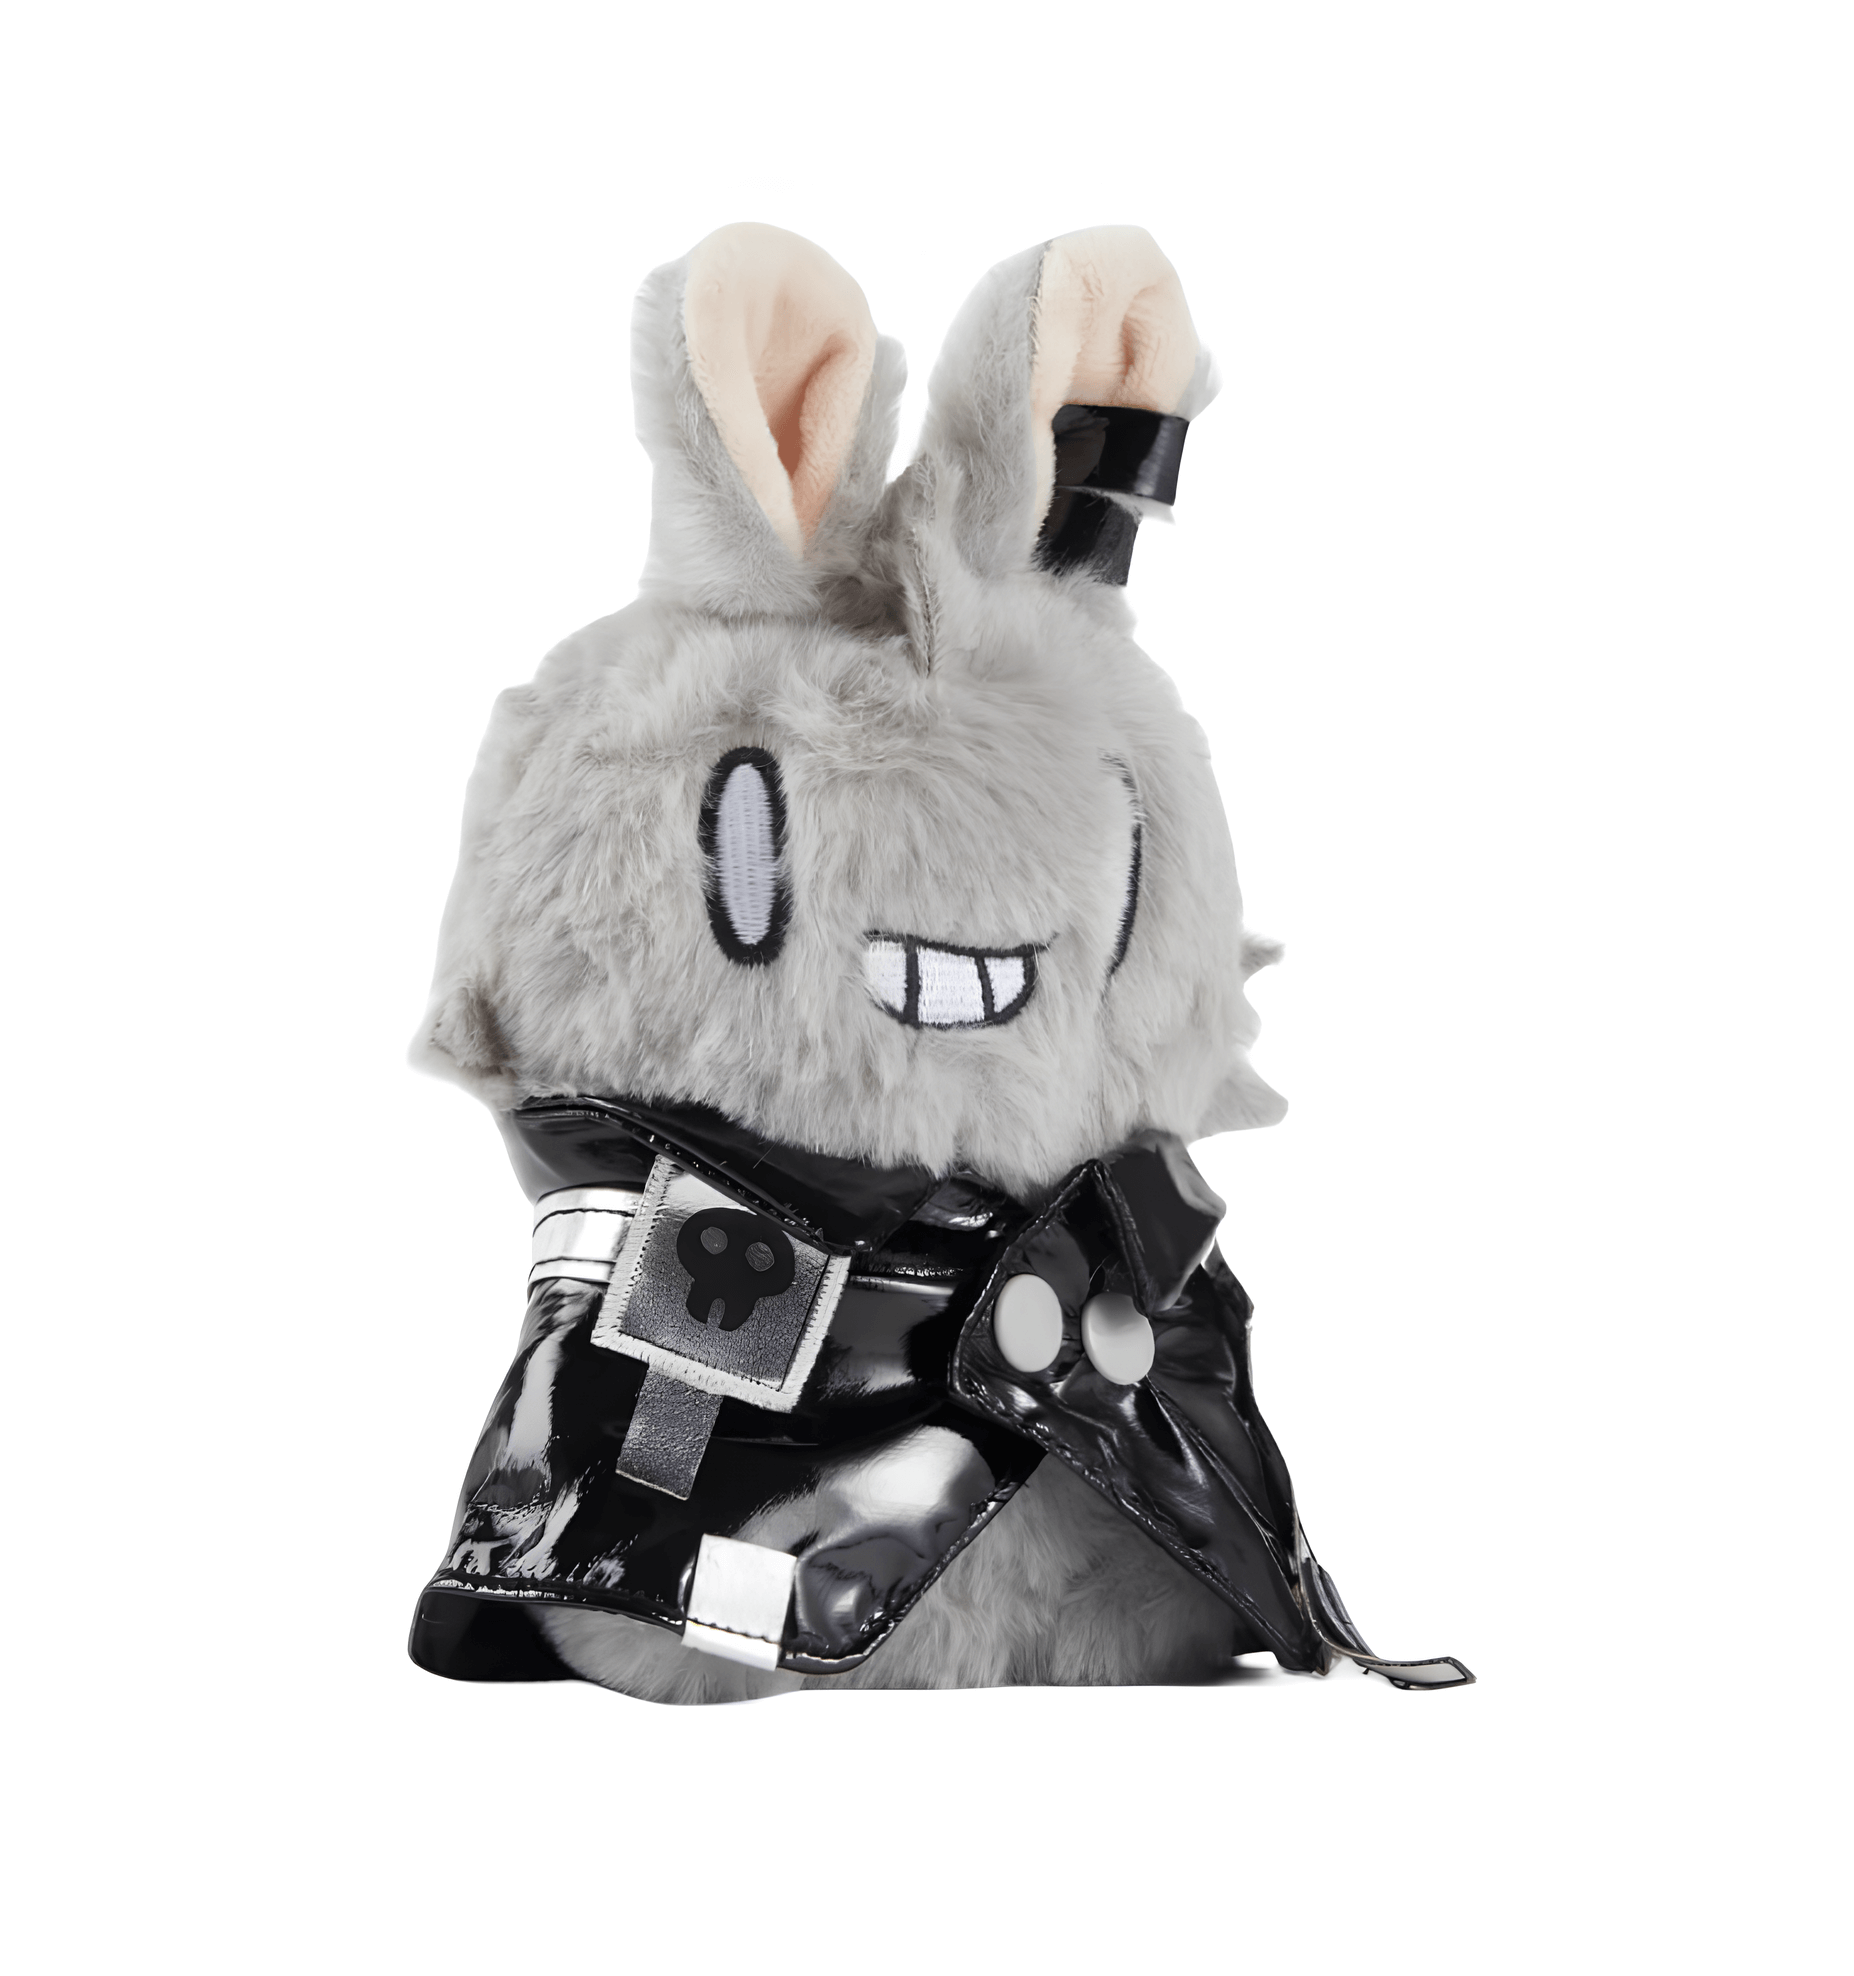 Arknights Lappland Rabbit plush toy